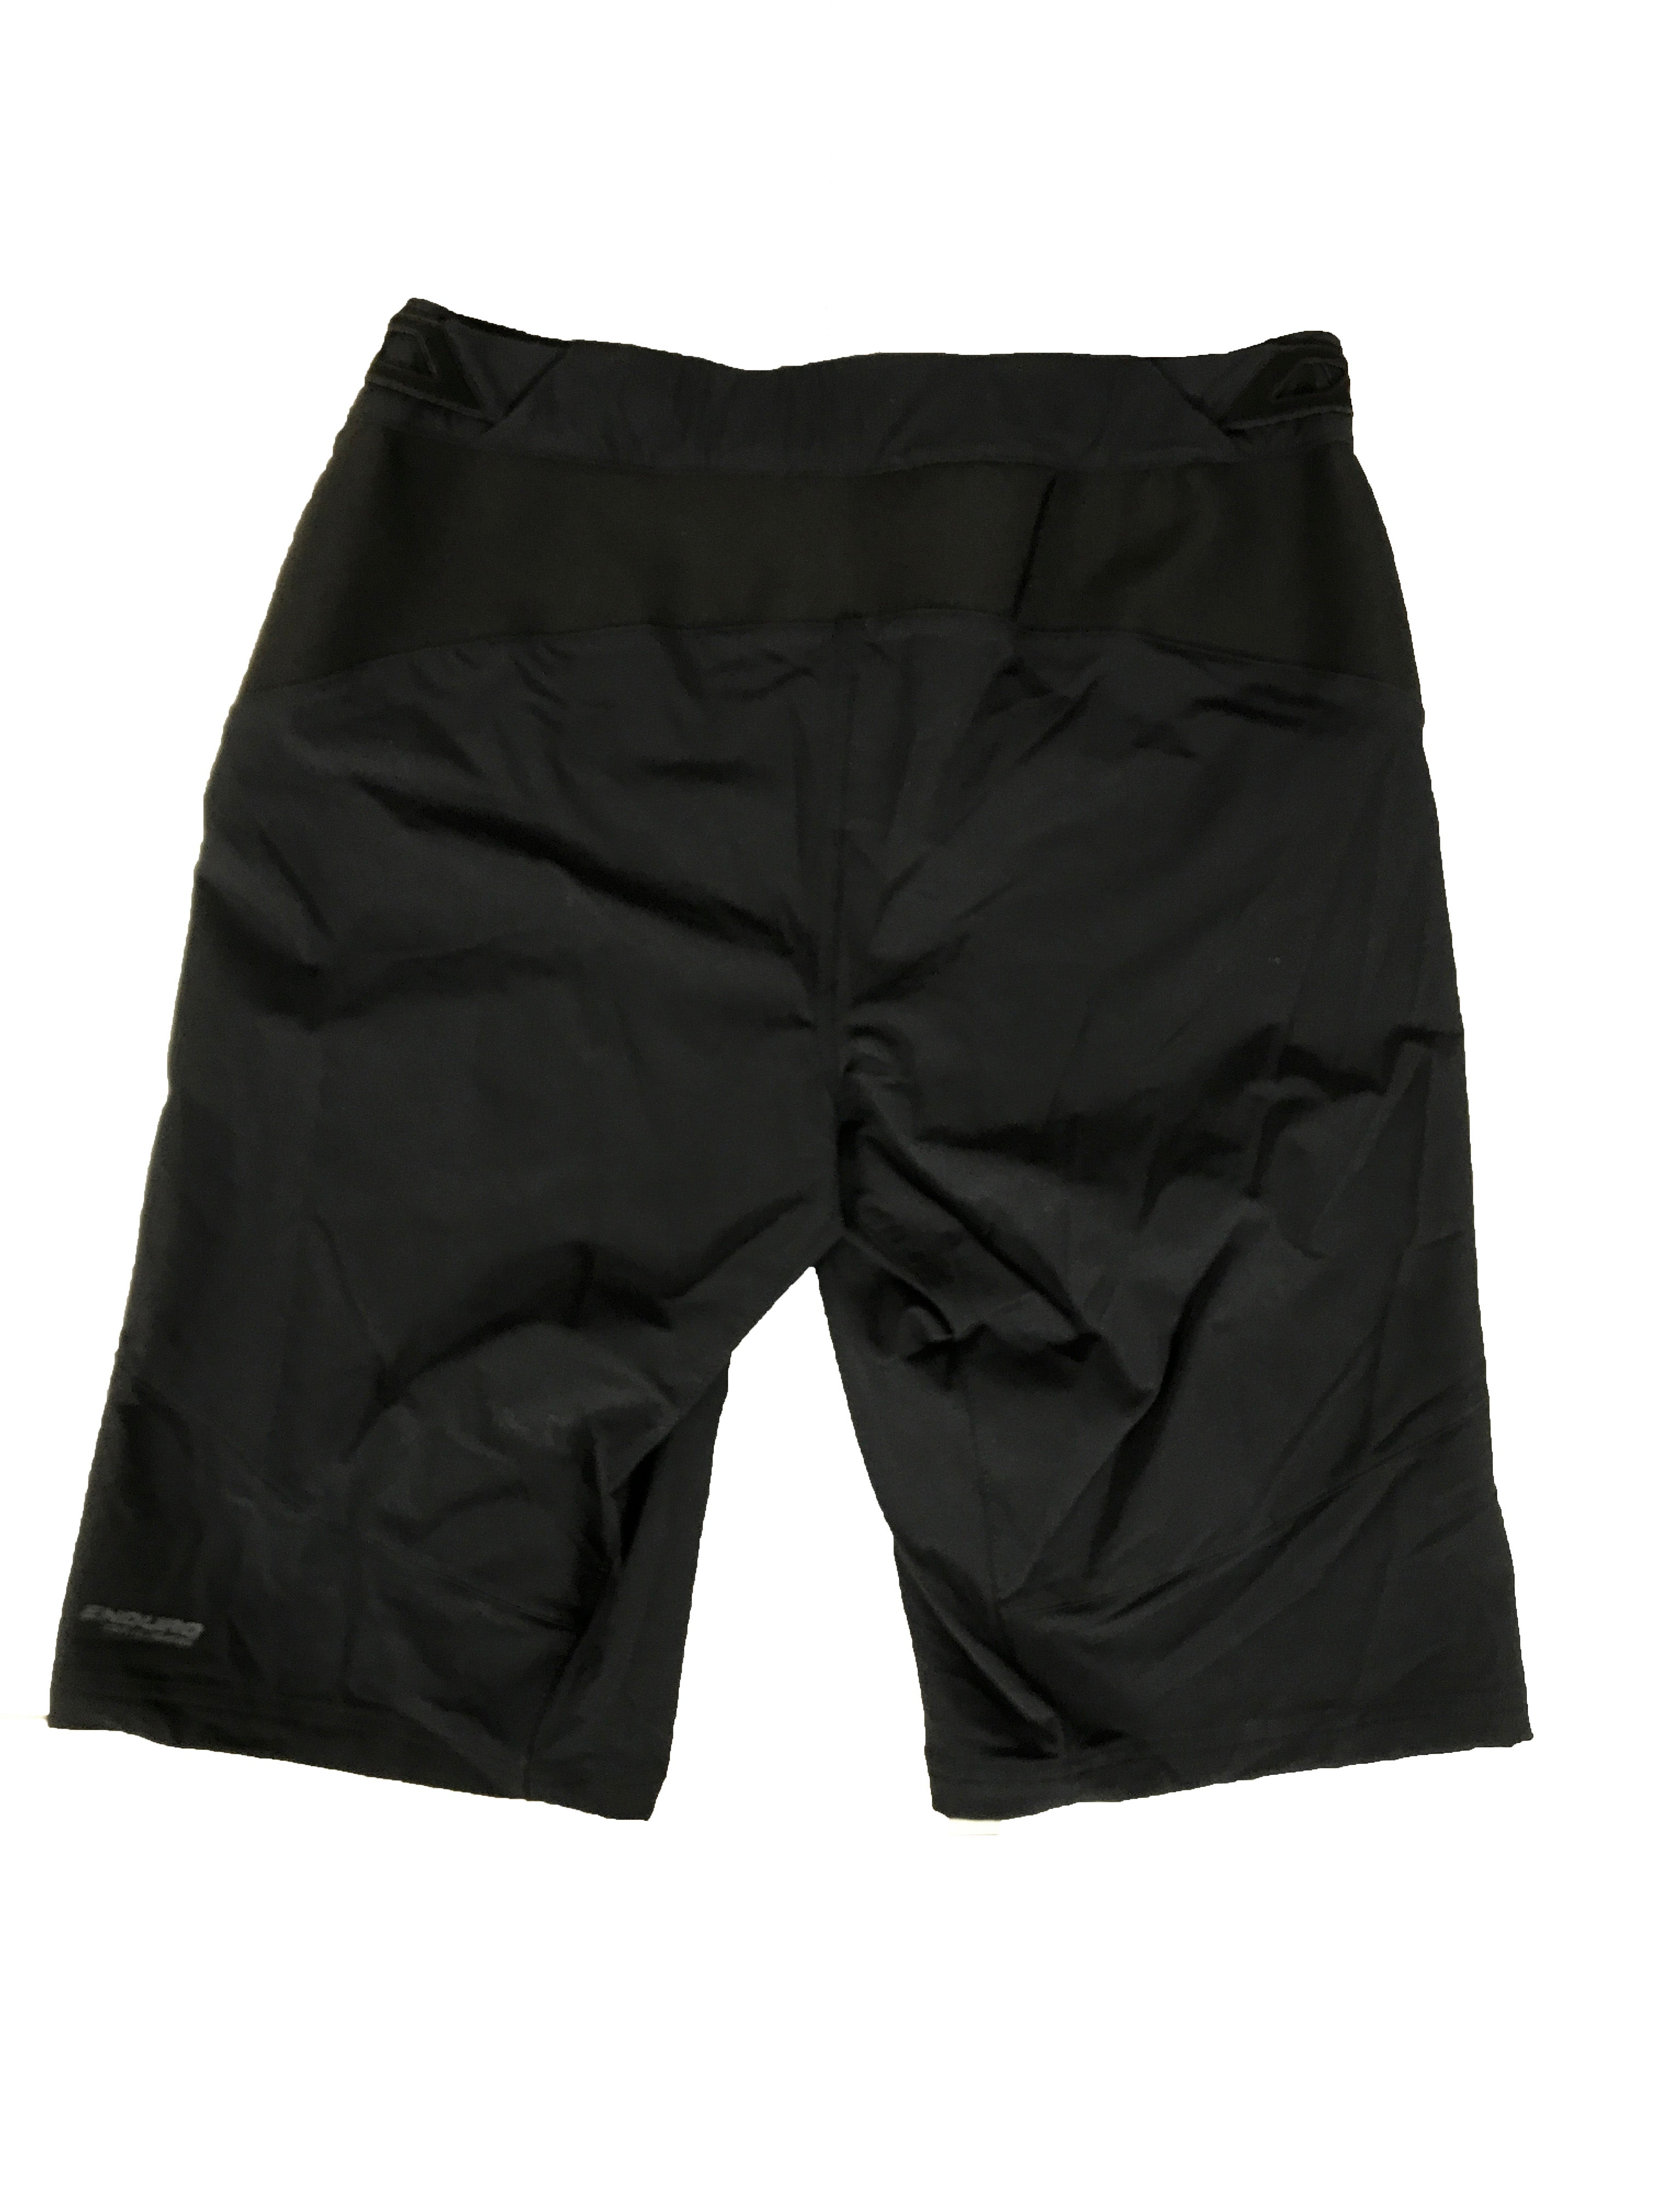 Specialized Enduro Comp Black Shorts Men's Size 42 NWT